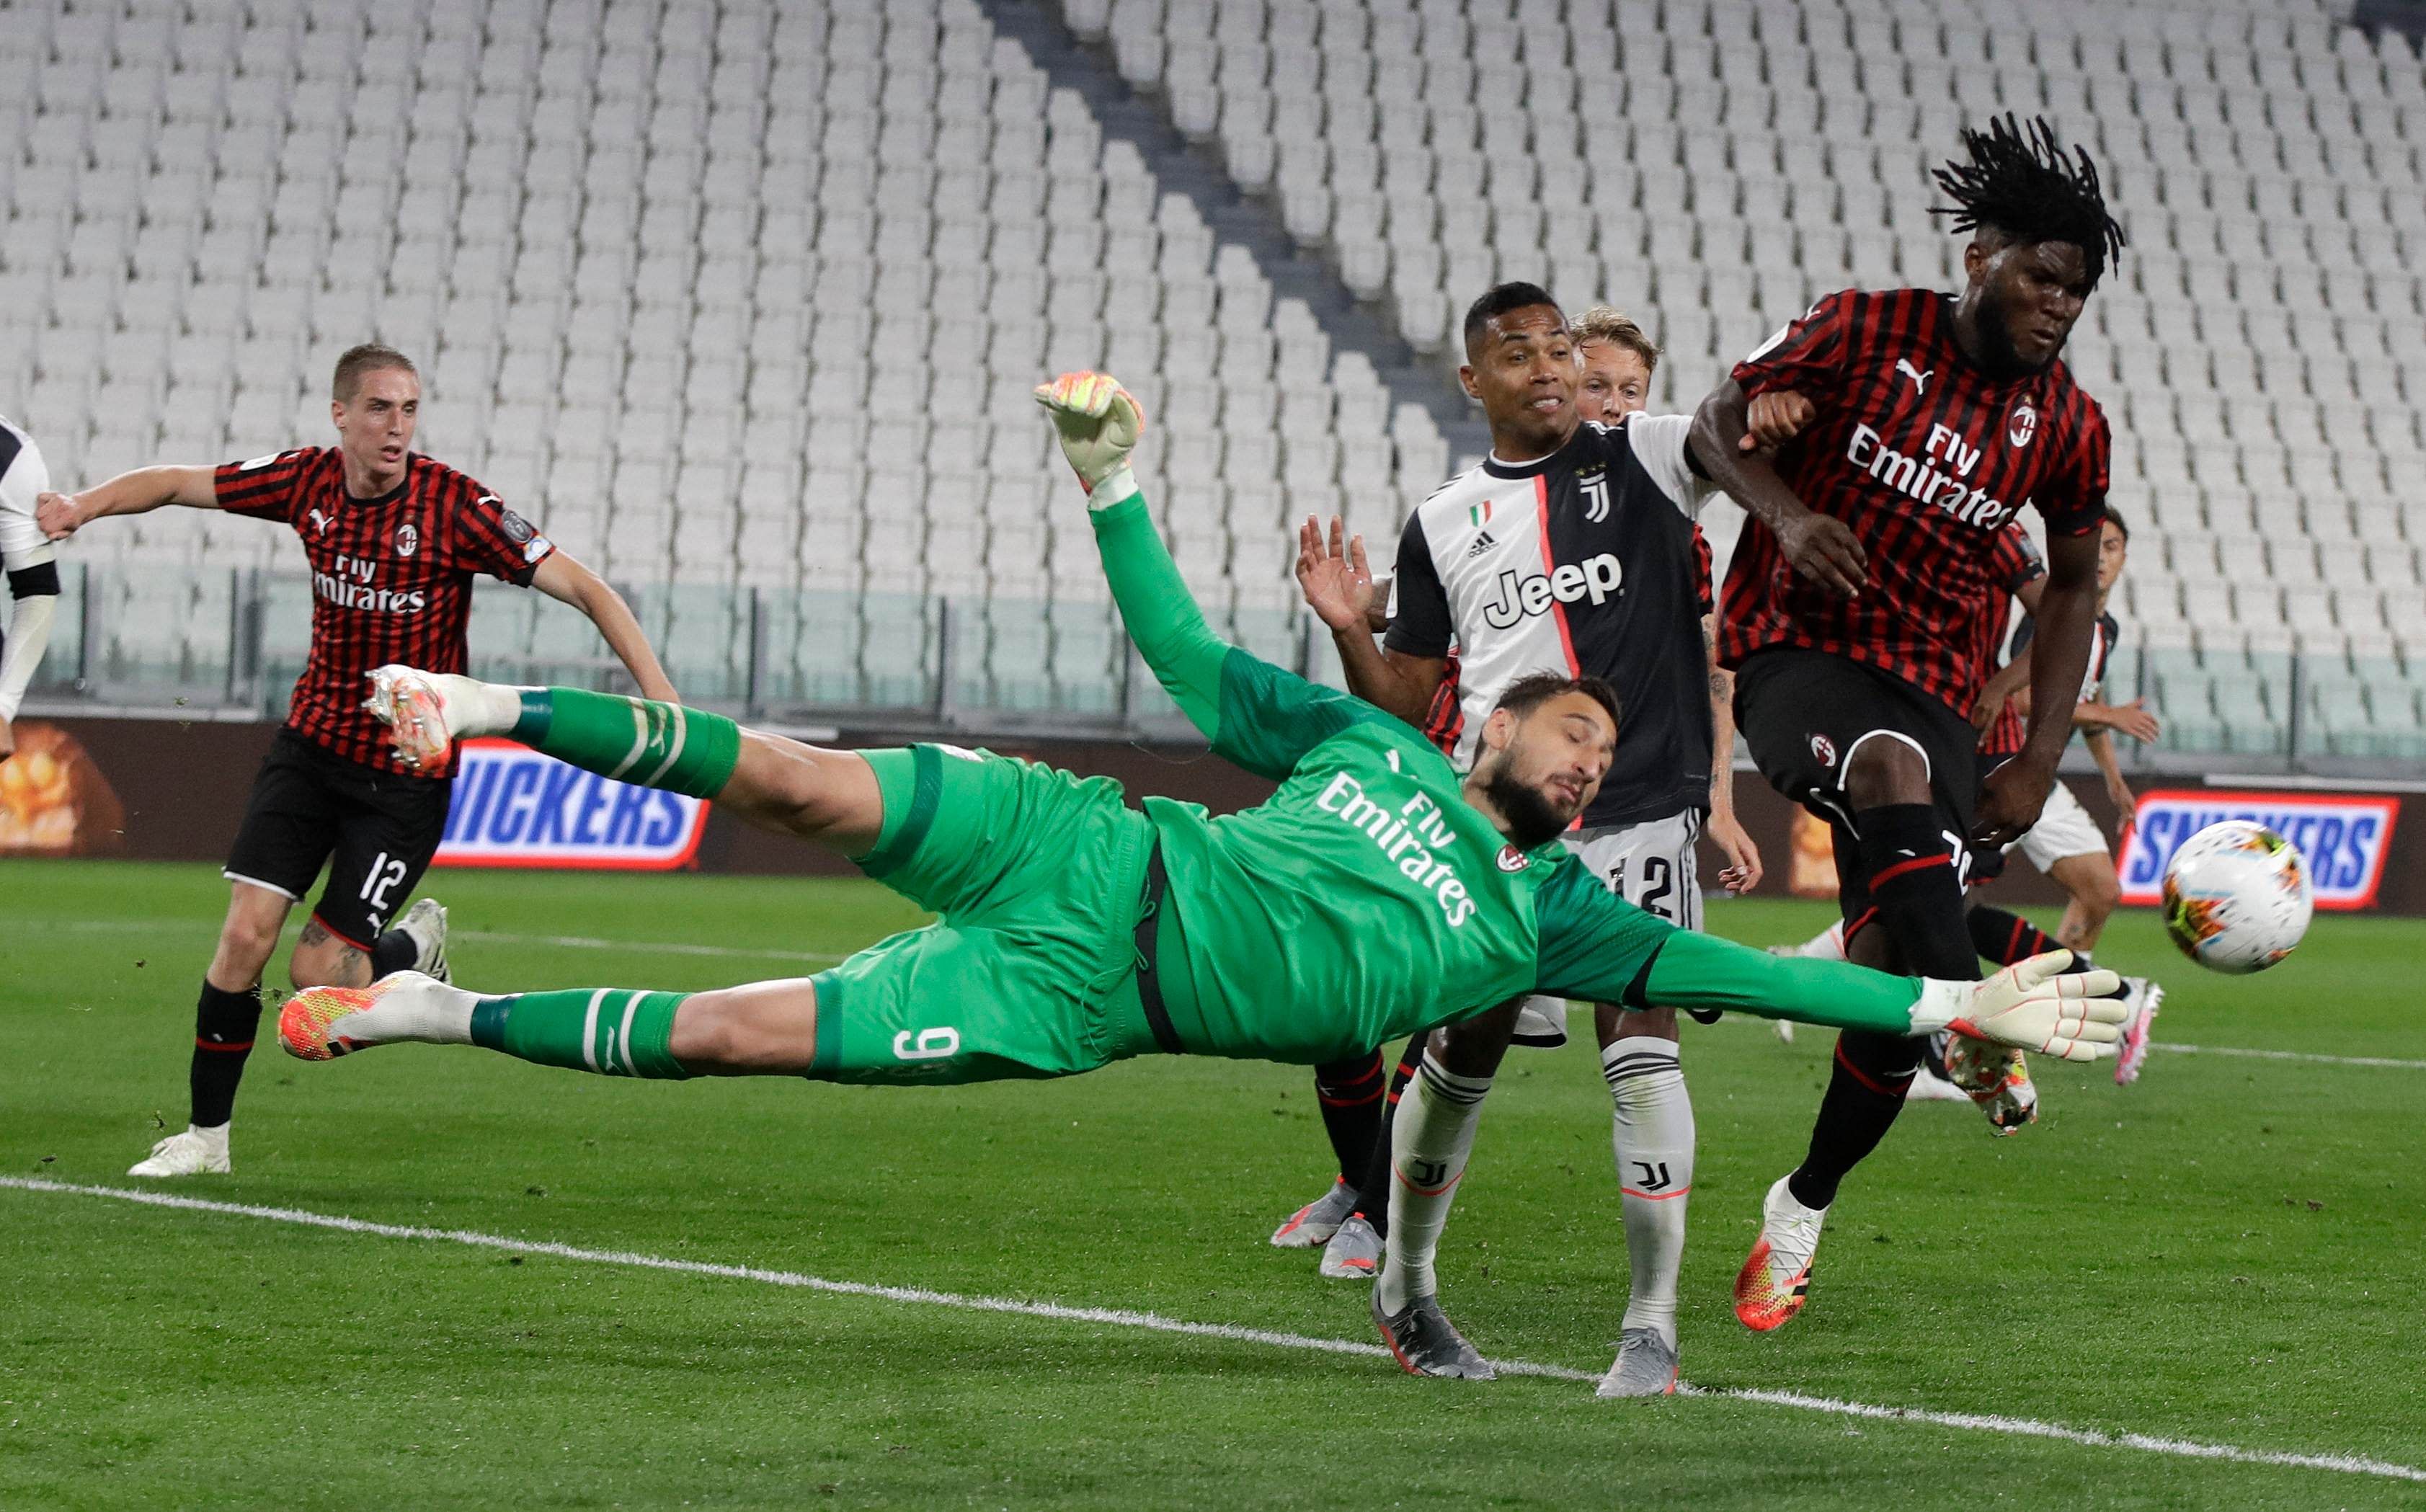  AC Milan's goalkeeper Gianluigi Donnarumma makes a save during an Italian Cup second leg soccer match between Juventus and AC Milan at the Allianz stadium, in Turin, Italy. Credit: AP